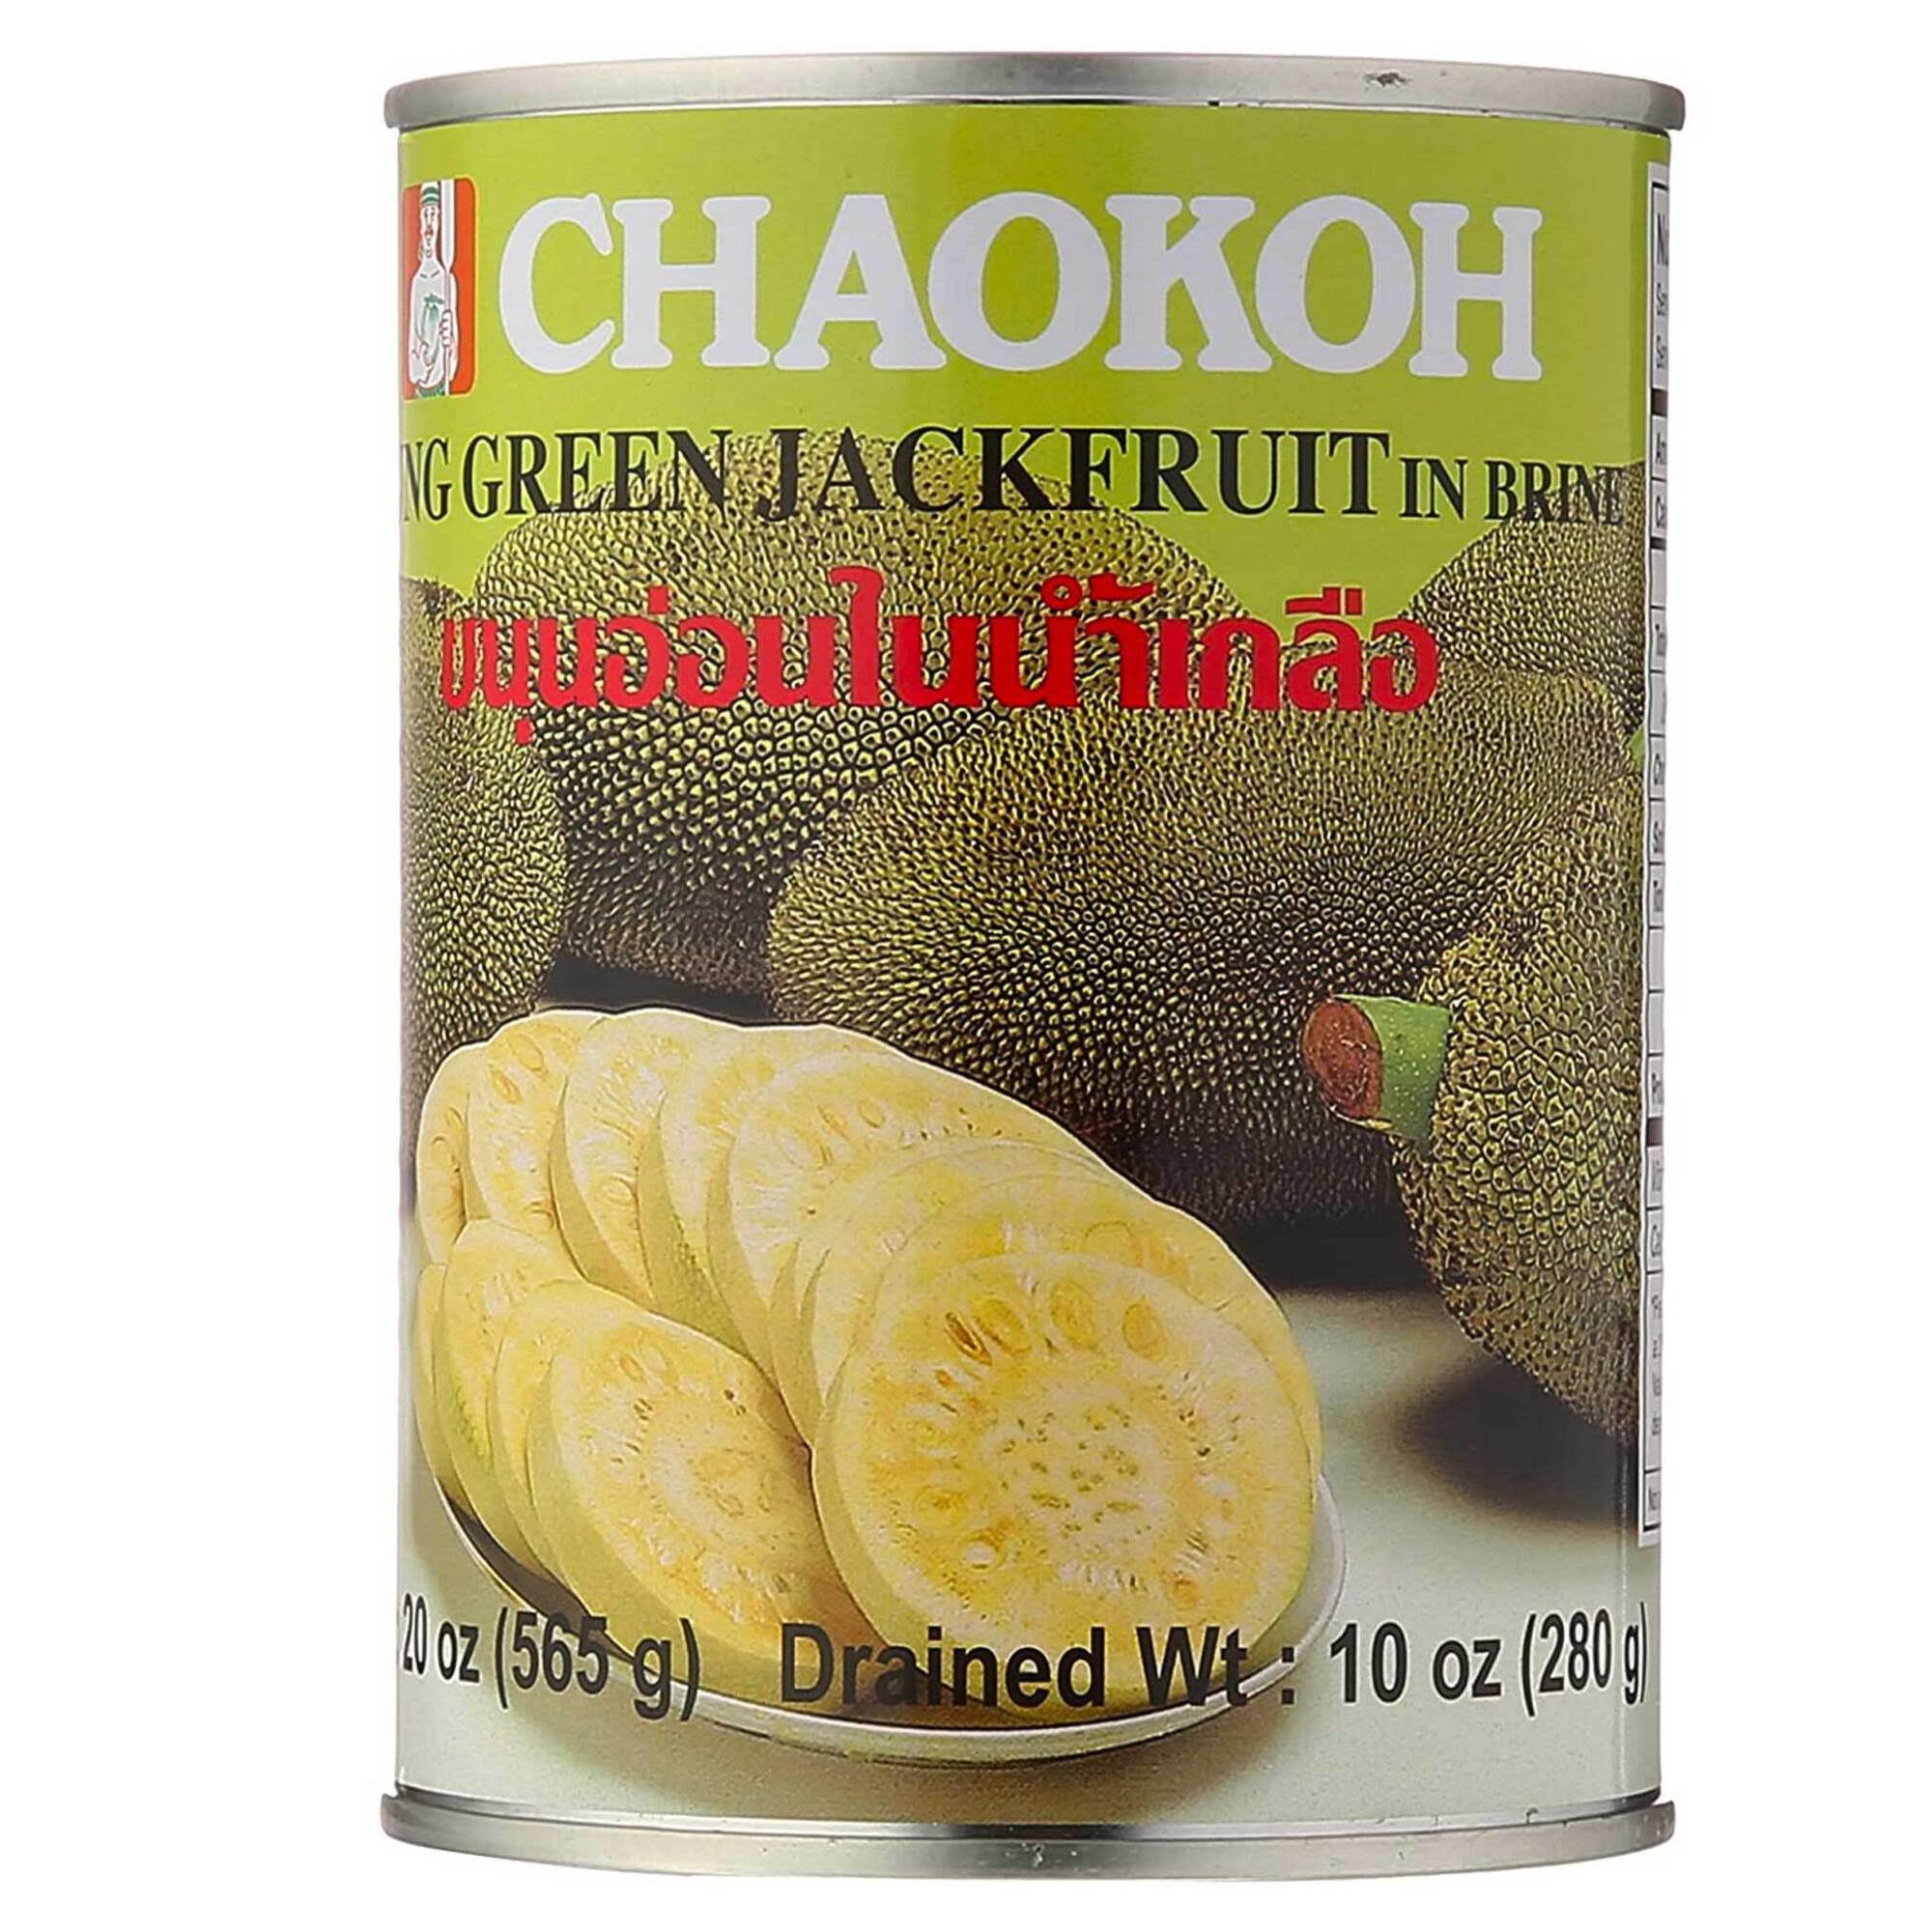 Chaokoh Jackfruit, Young Green, in Brine - 20 oz